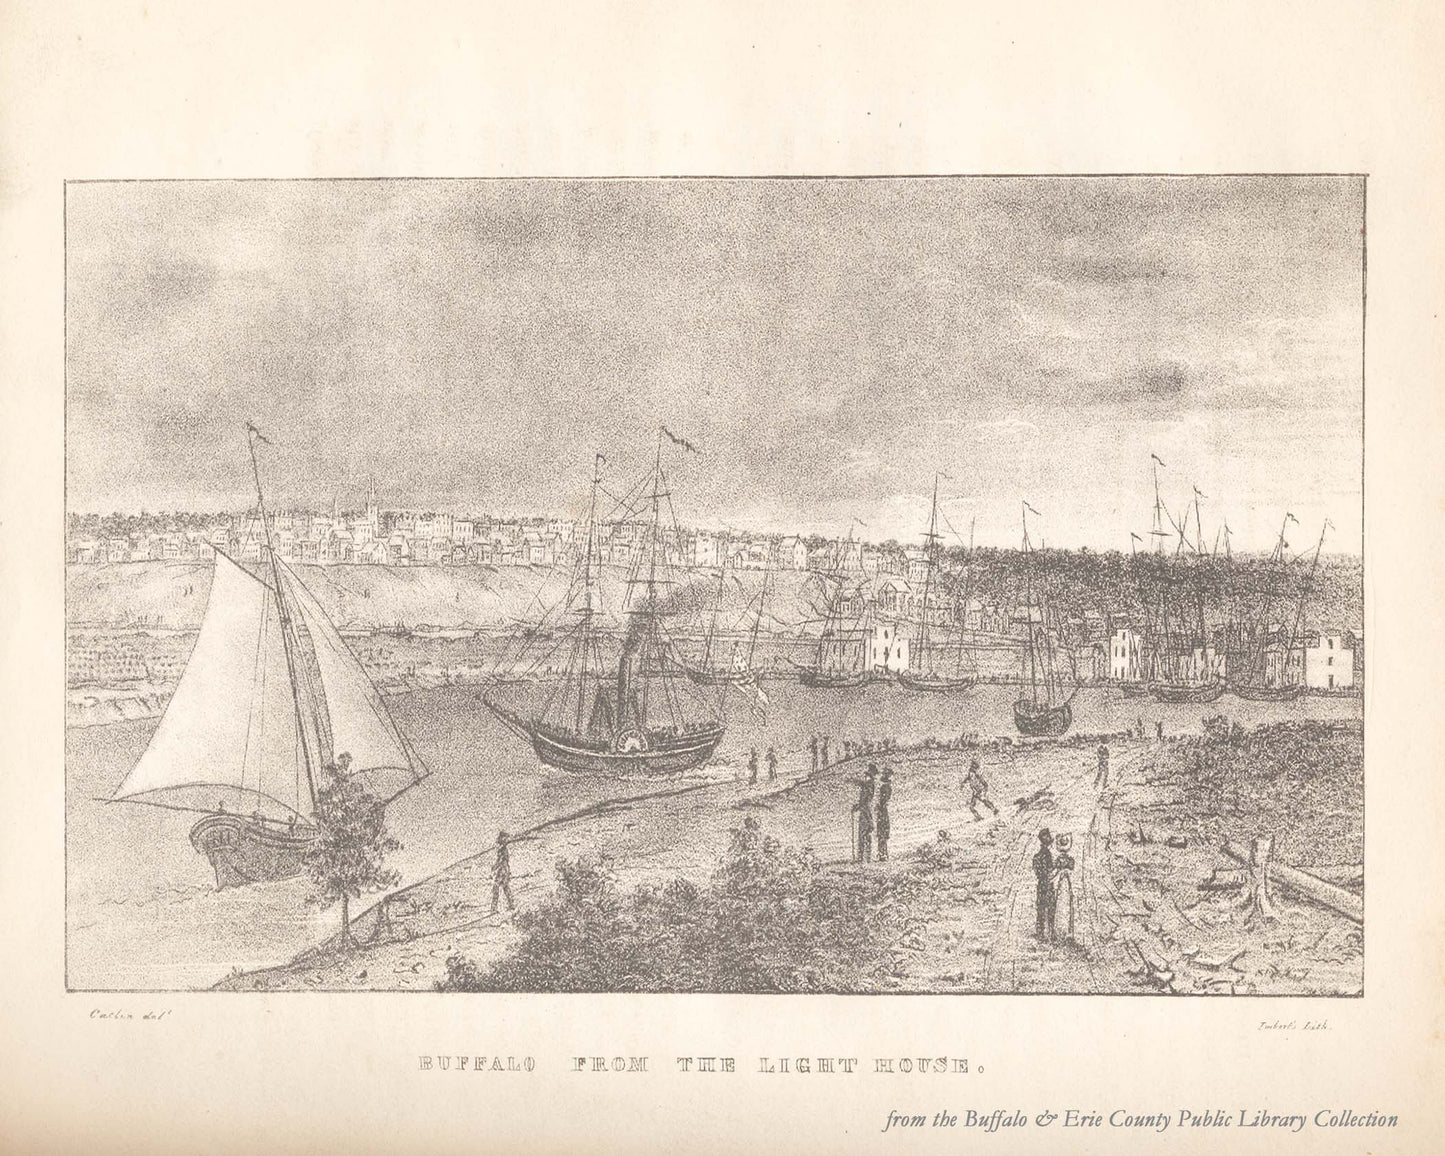 George Catlin (1796-1872) Visits Buffalo, 1825